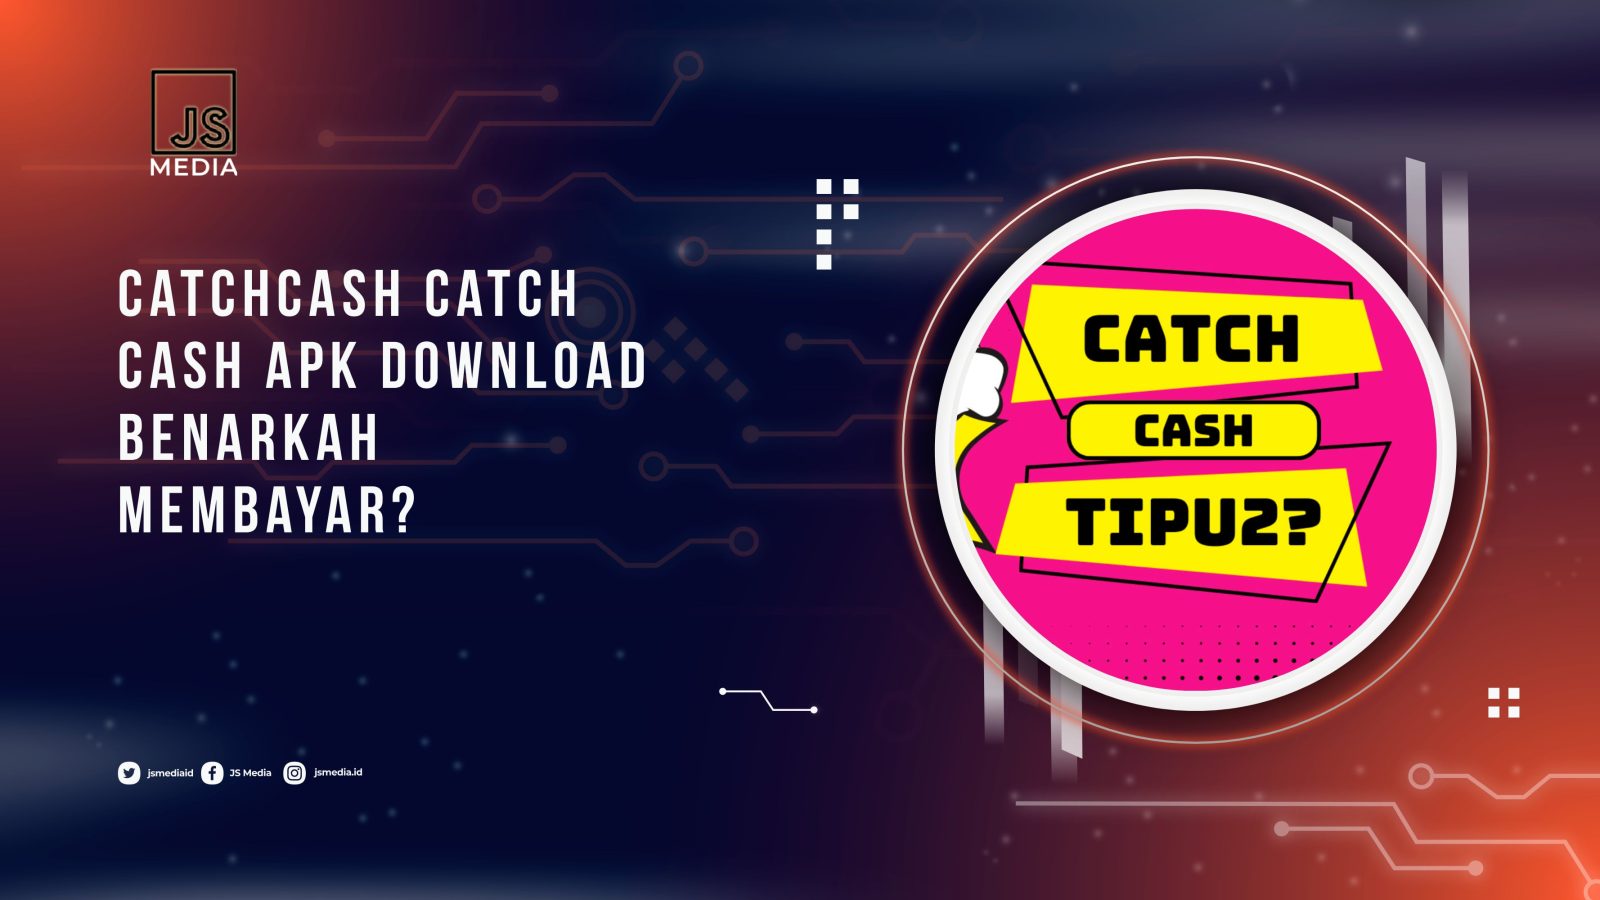 Catchcash Catch Cash Apk